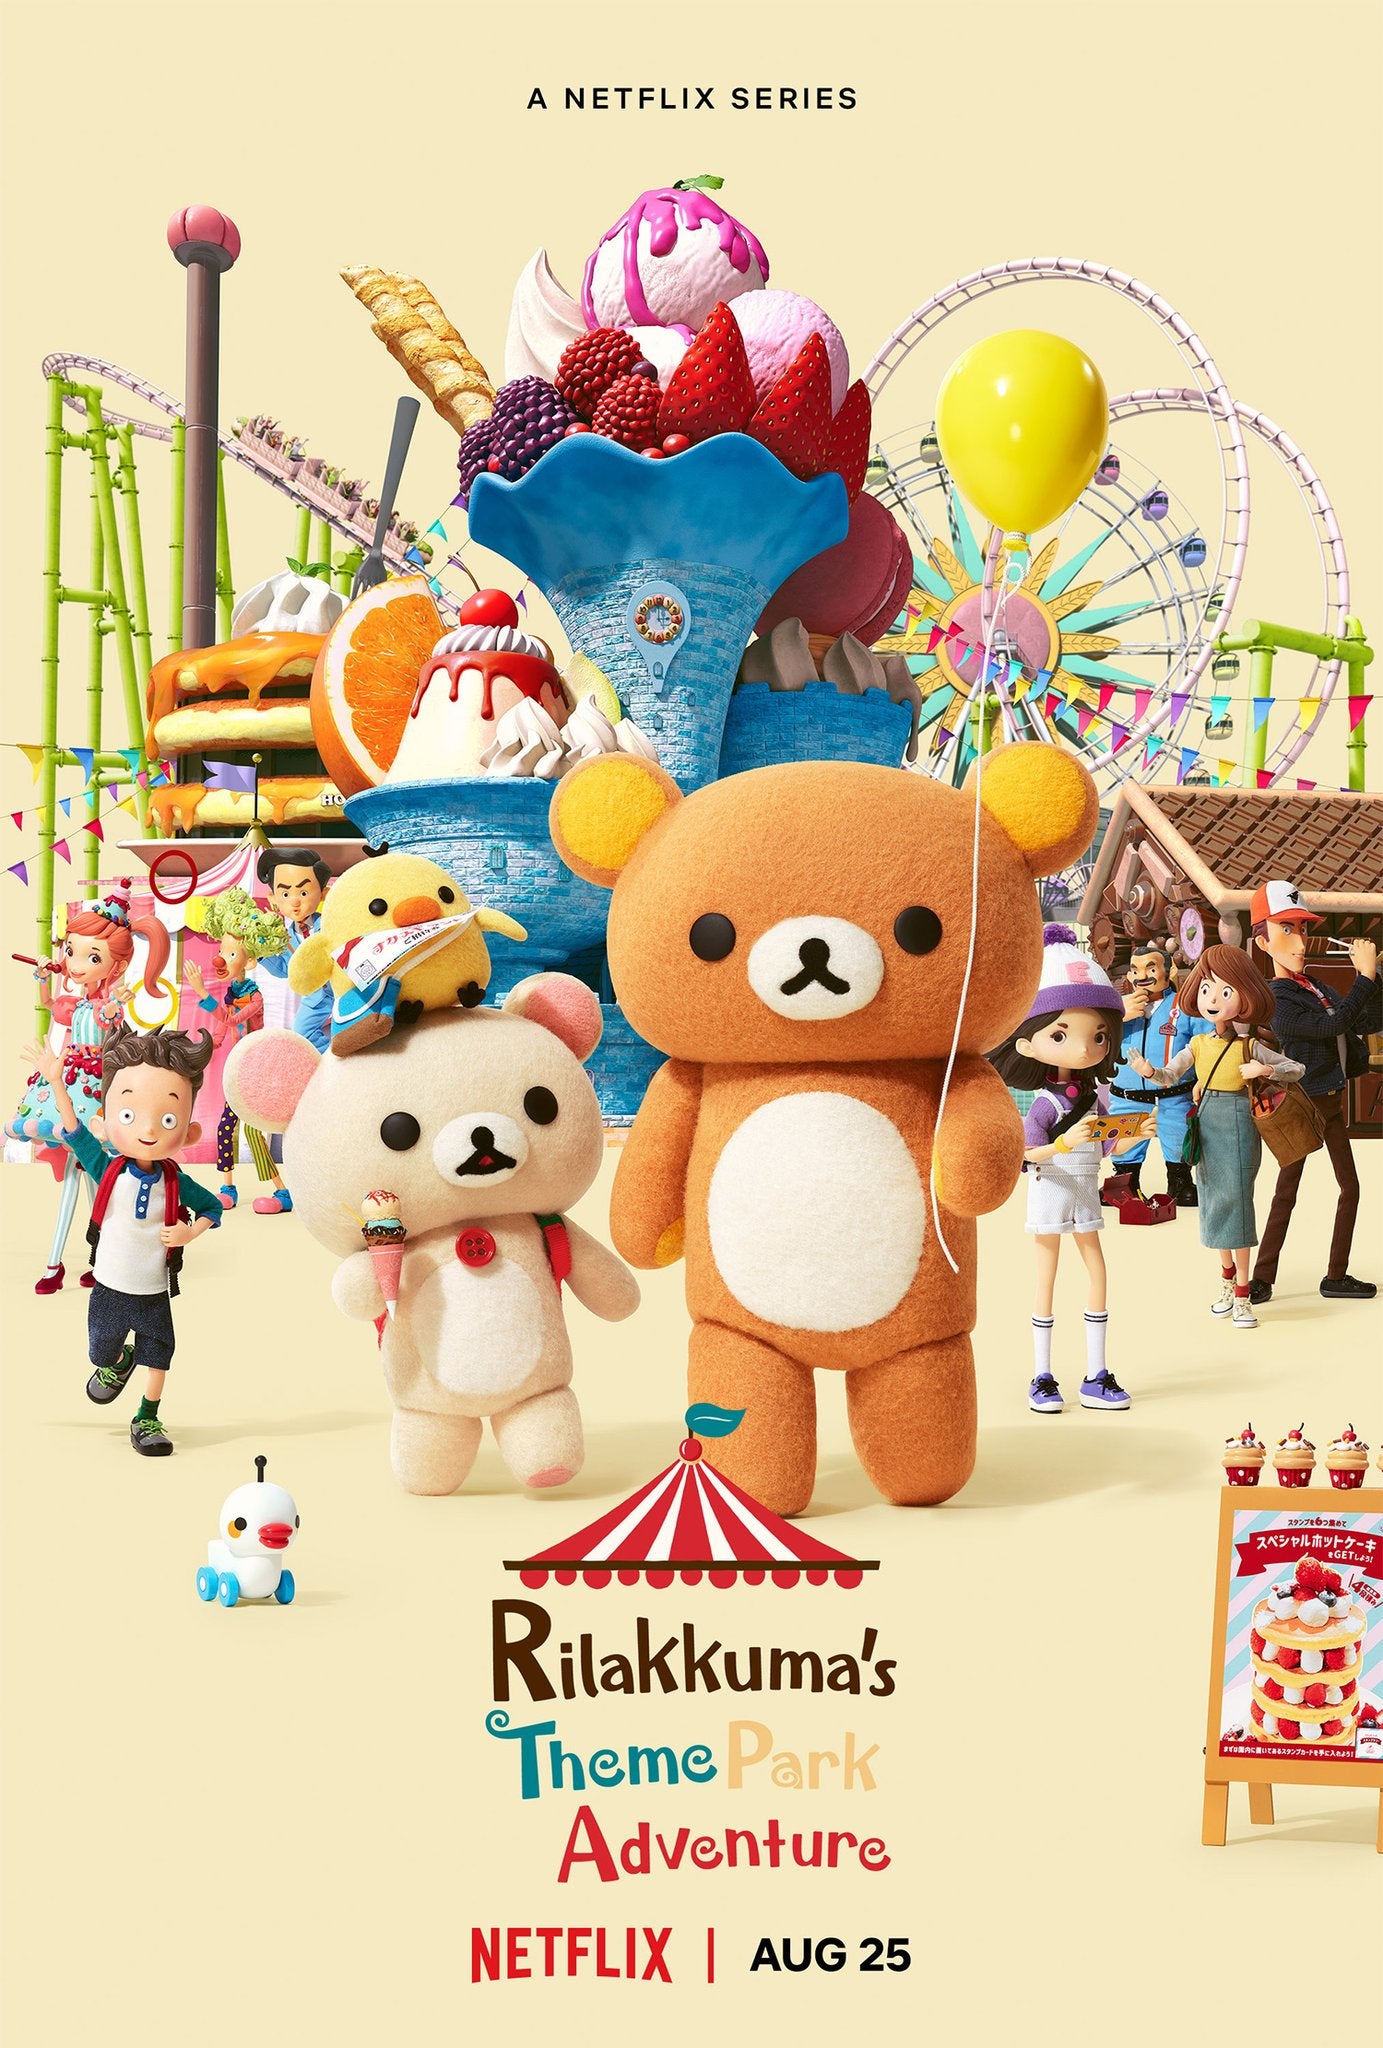 TV ratings for Rilakkuma's Theme Park Adventure (リラックマと遊園地) in India. Netflix TV series